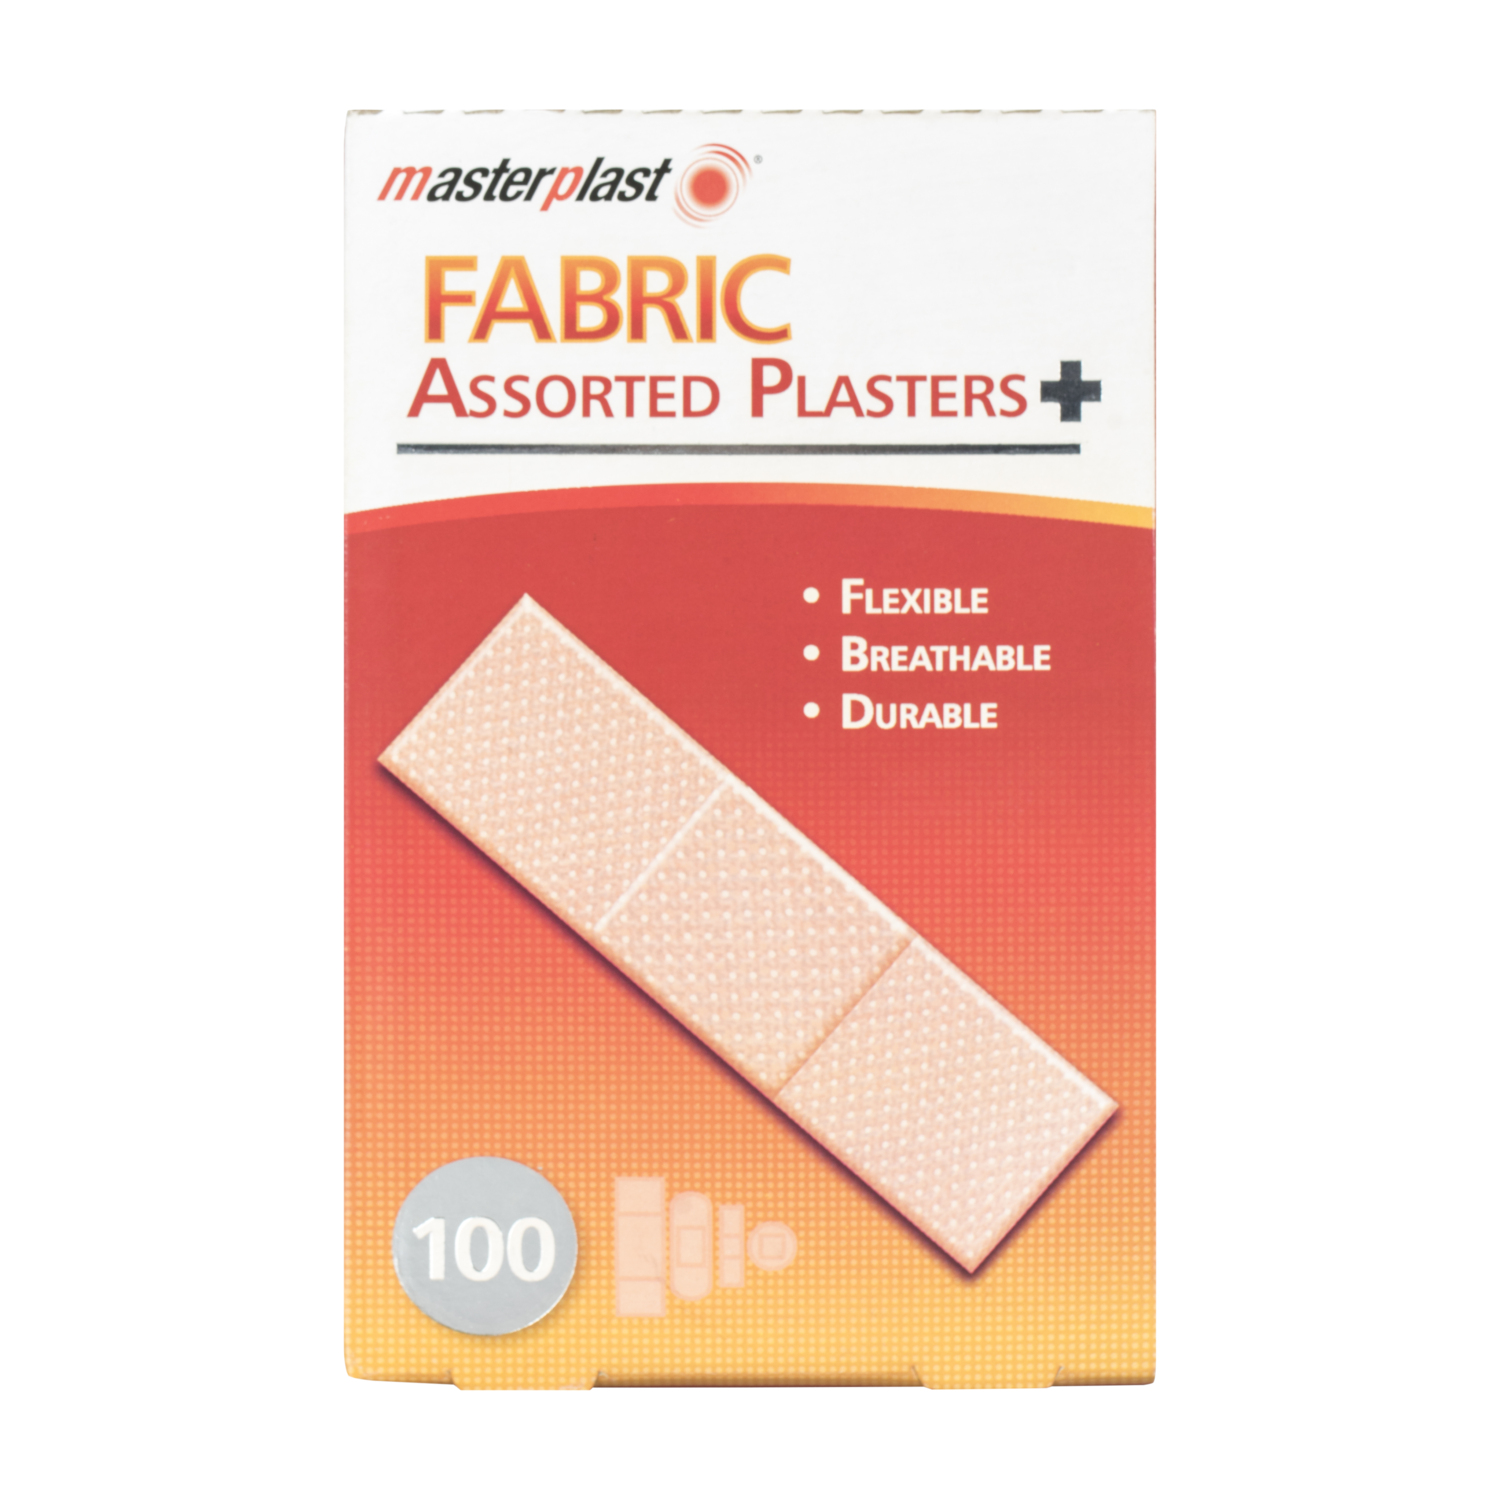 Pack of 100 Fabric Masterplast Assorted Plasters Image